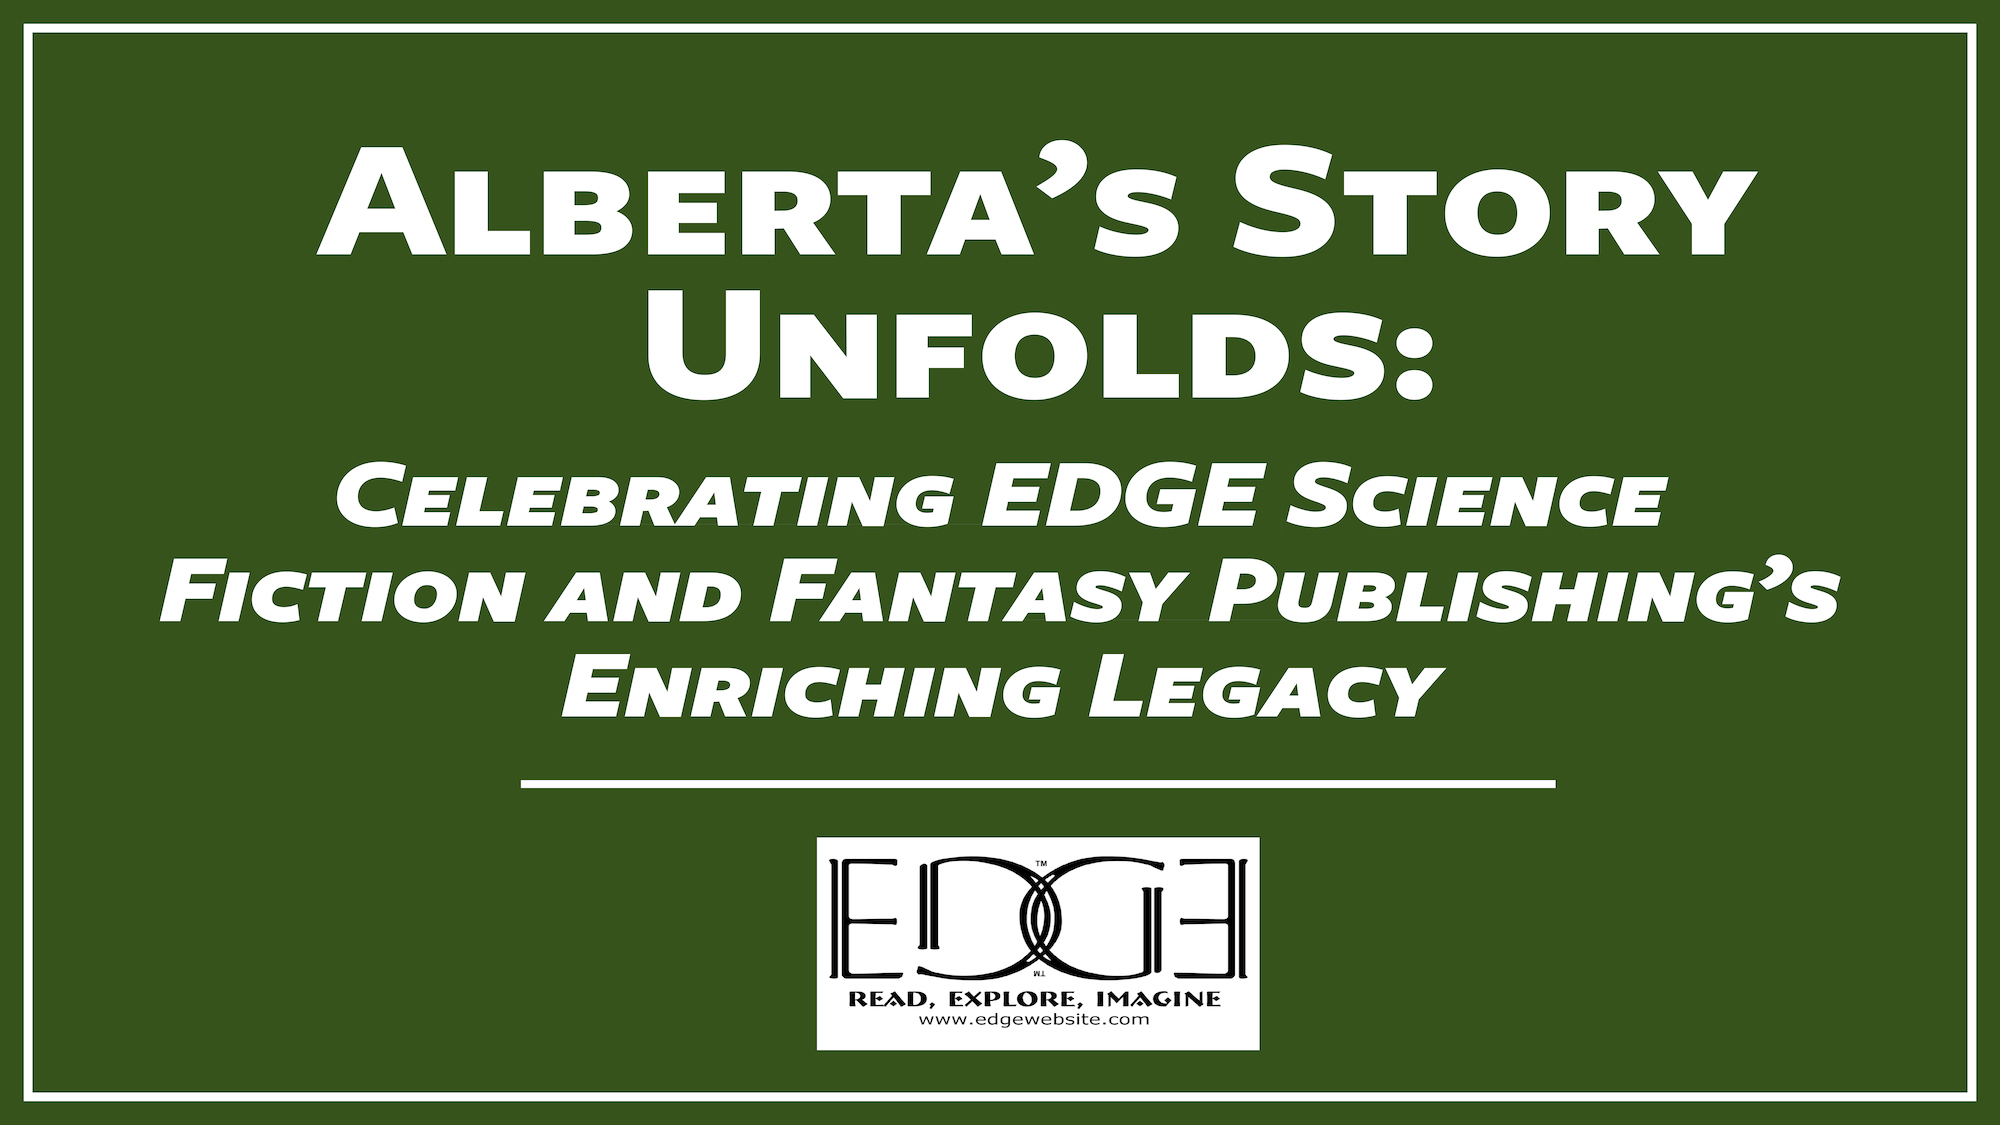 Alberta’s Story Unfolds: Celebrating EDGE Science Fiction and Fantasy Publishing’s Enriching Legacy